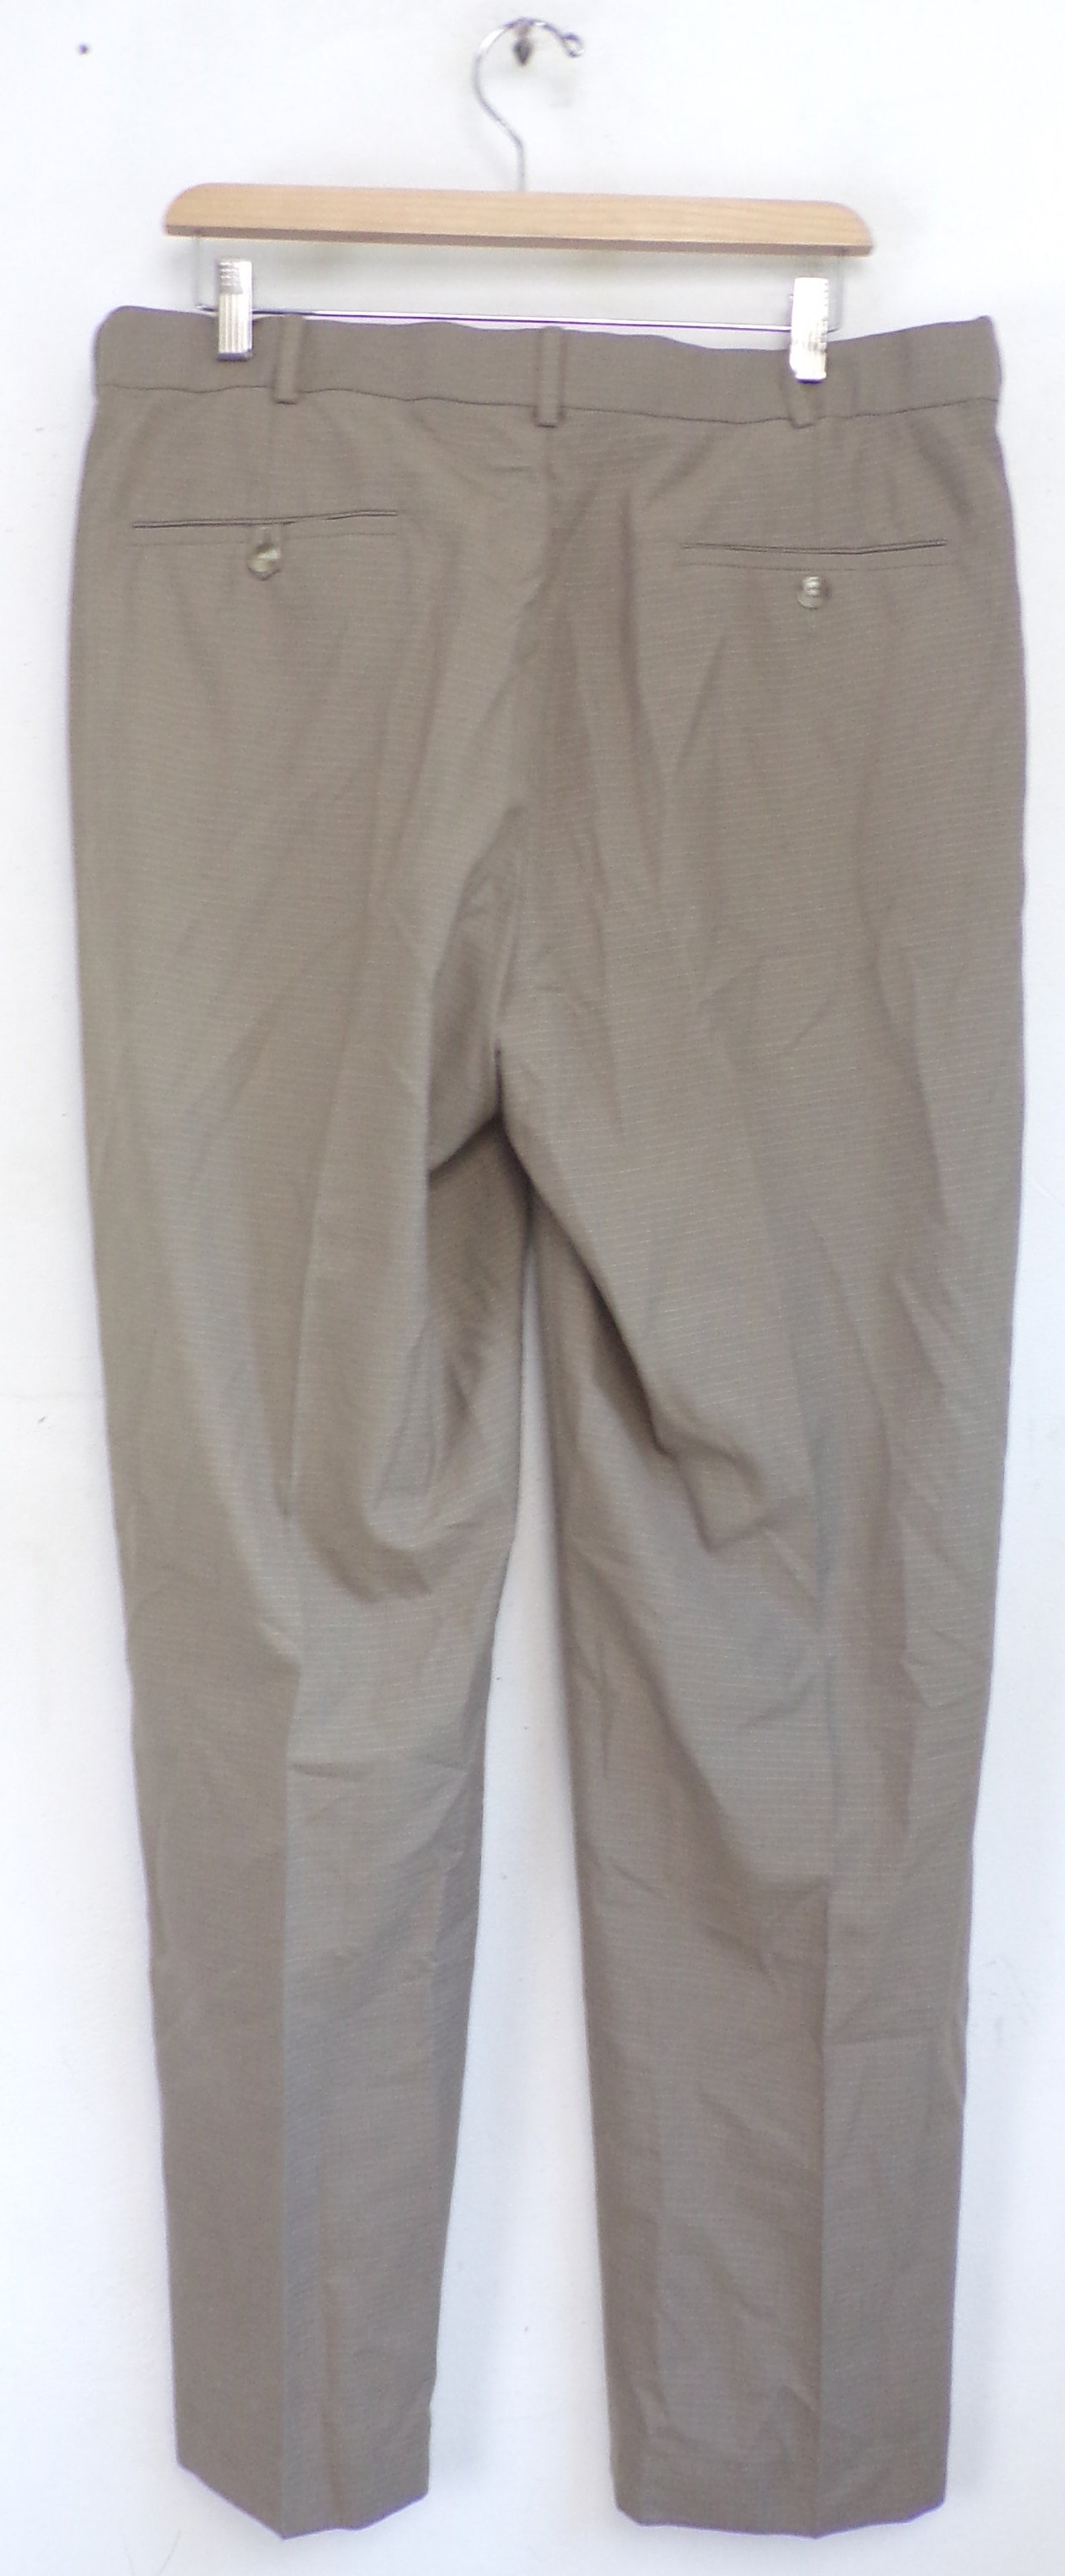 Vintage Mens Check Pants Light Brown Checkered Dress Pants - Etsy UK